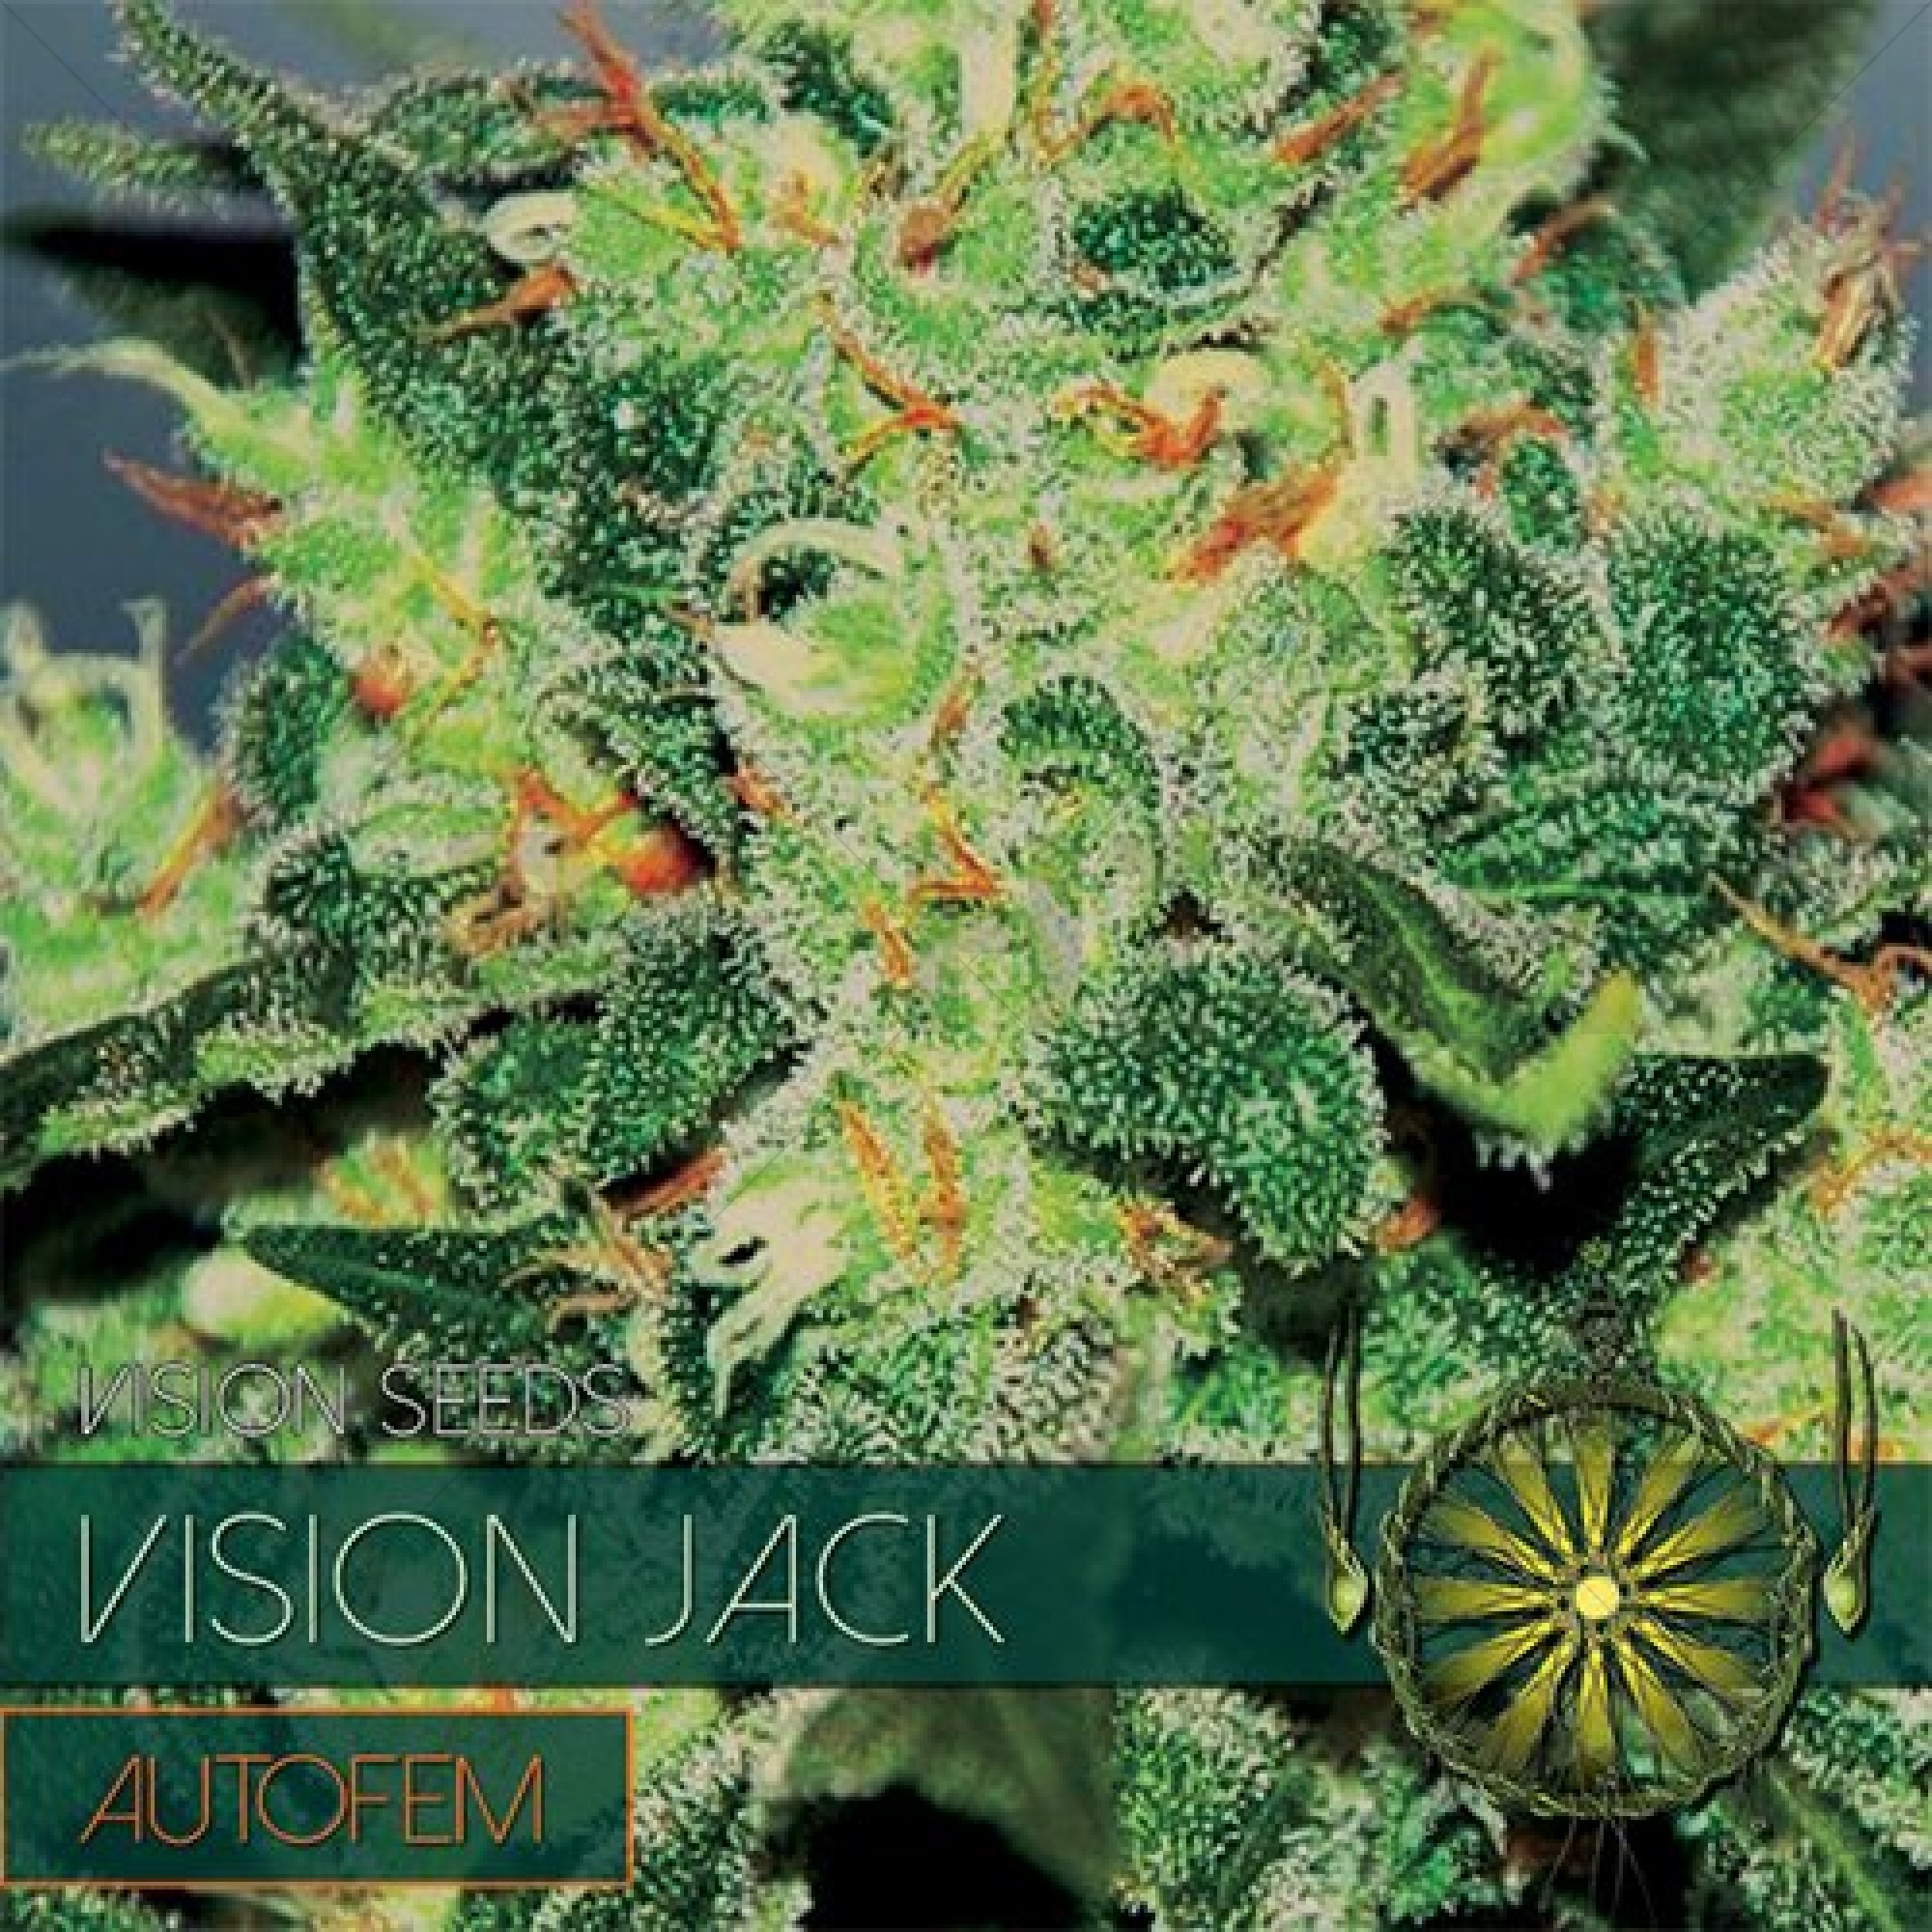 Vision Jack Auto (Vision Seeds)